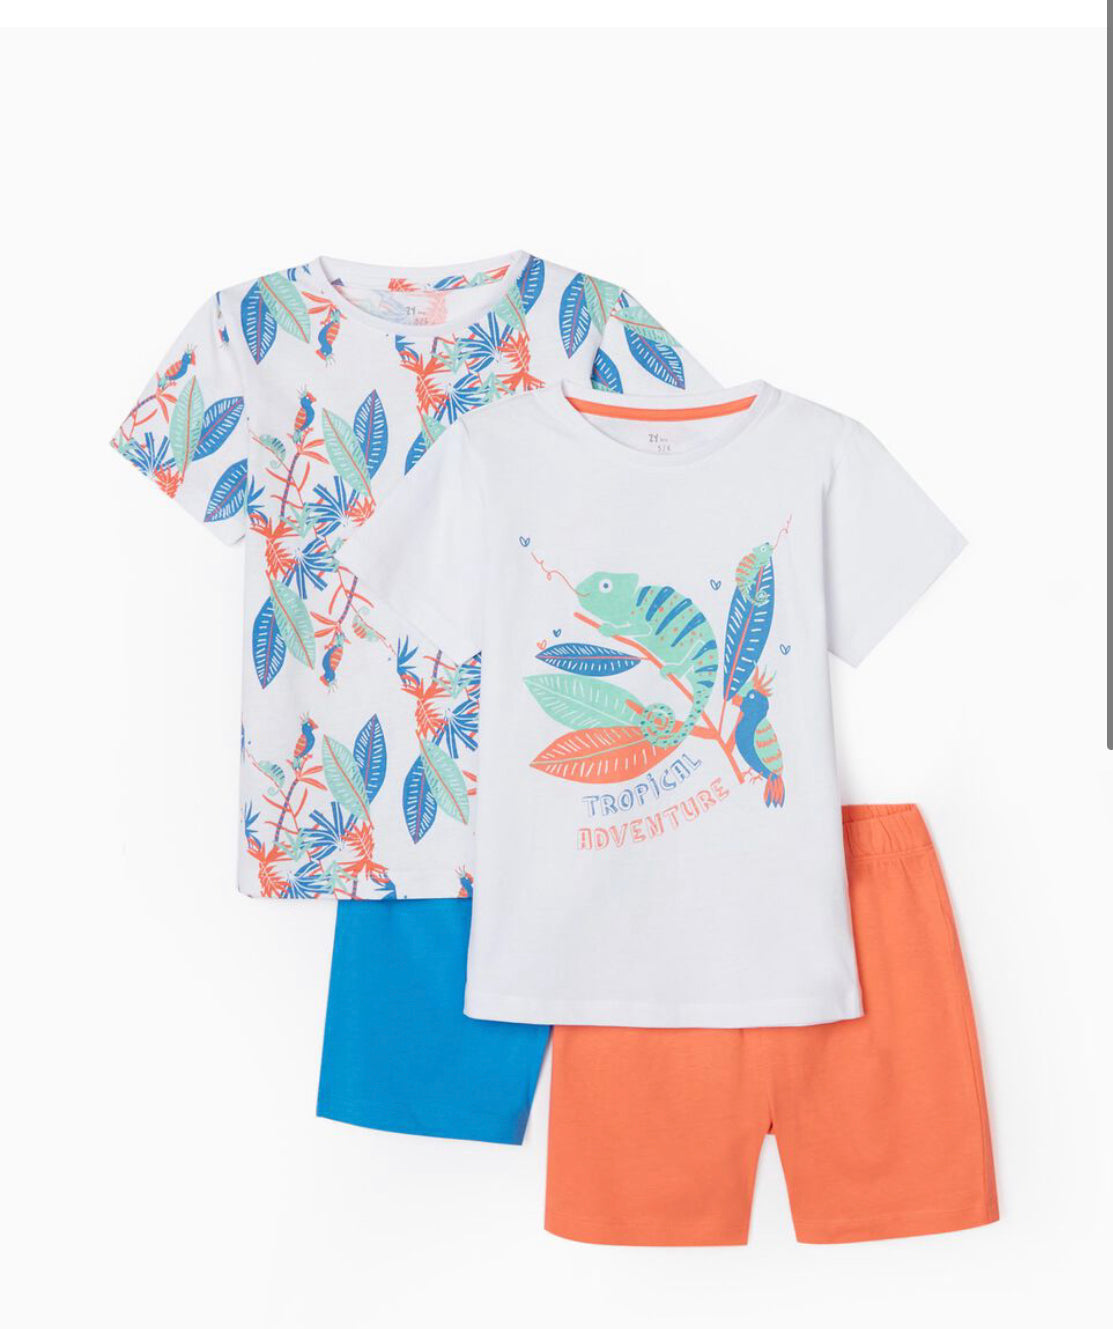 2 Pijamas Para Niño 'Tropical Adventure', Coral/Azul/Blanco lolimariscalmoda 19.99